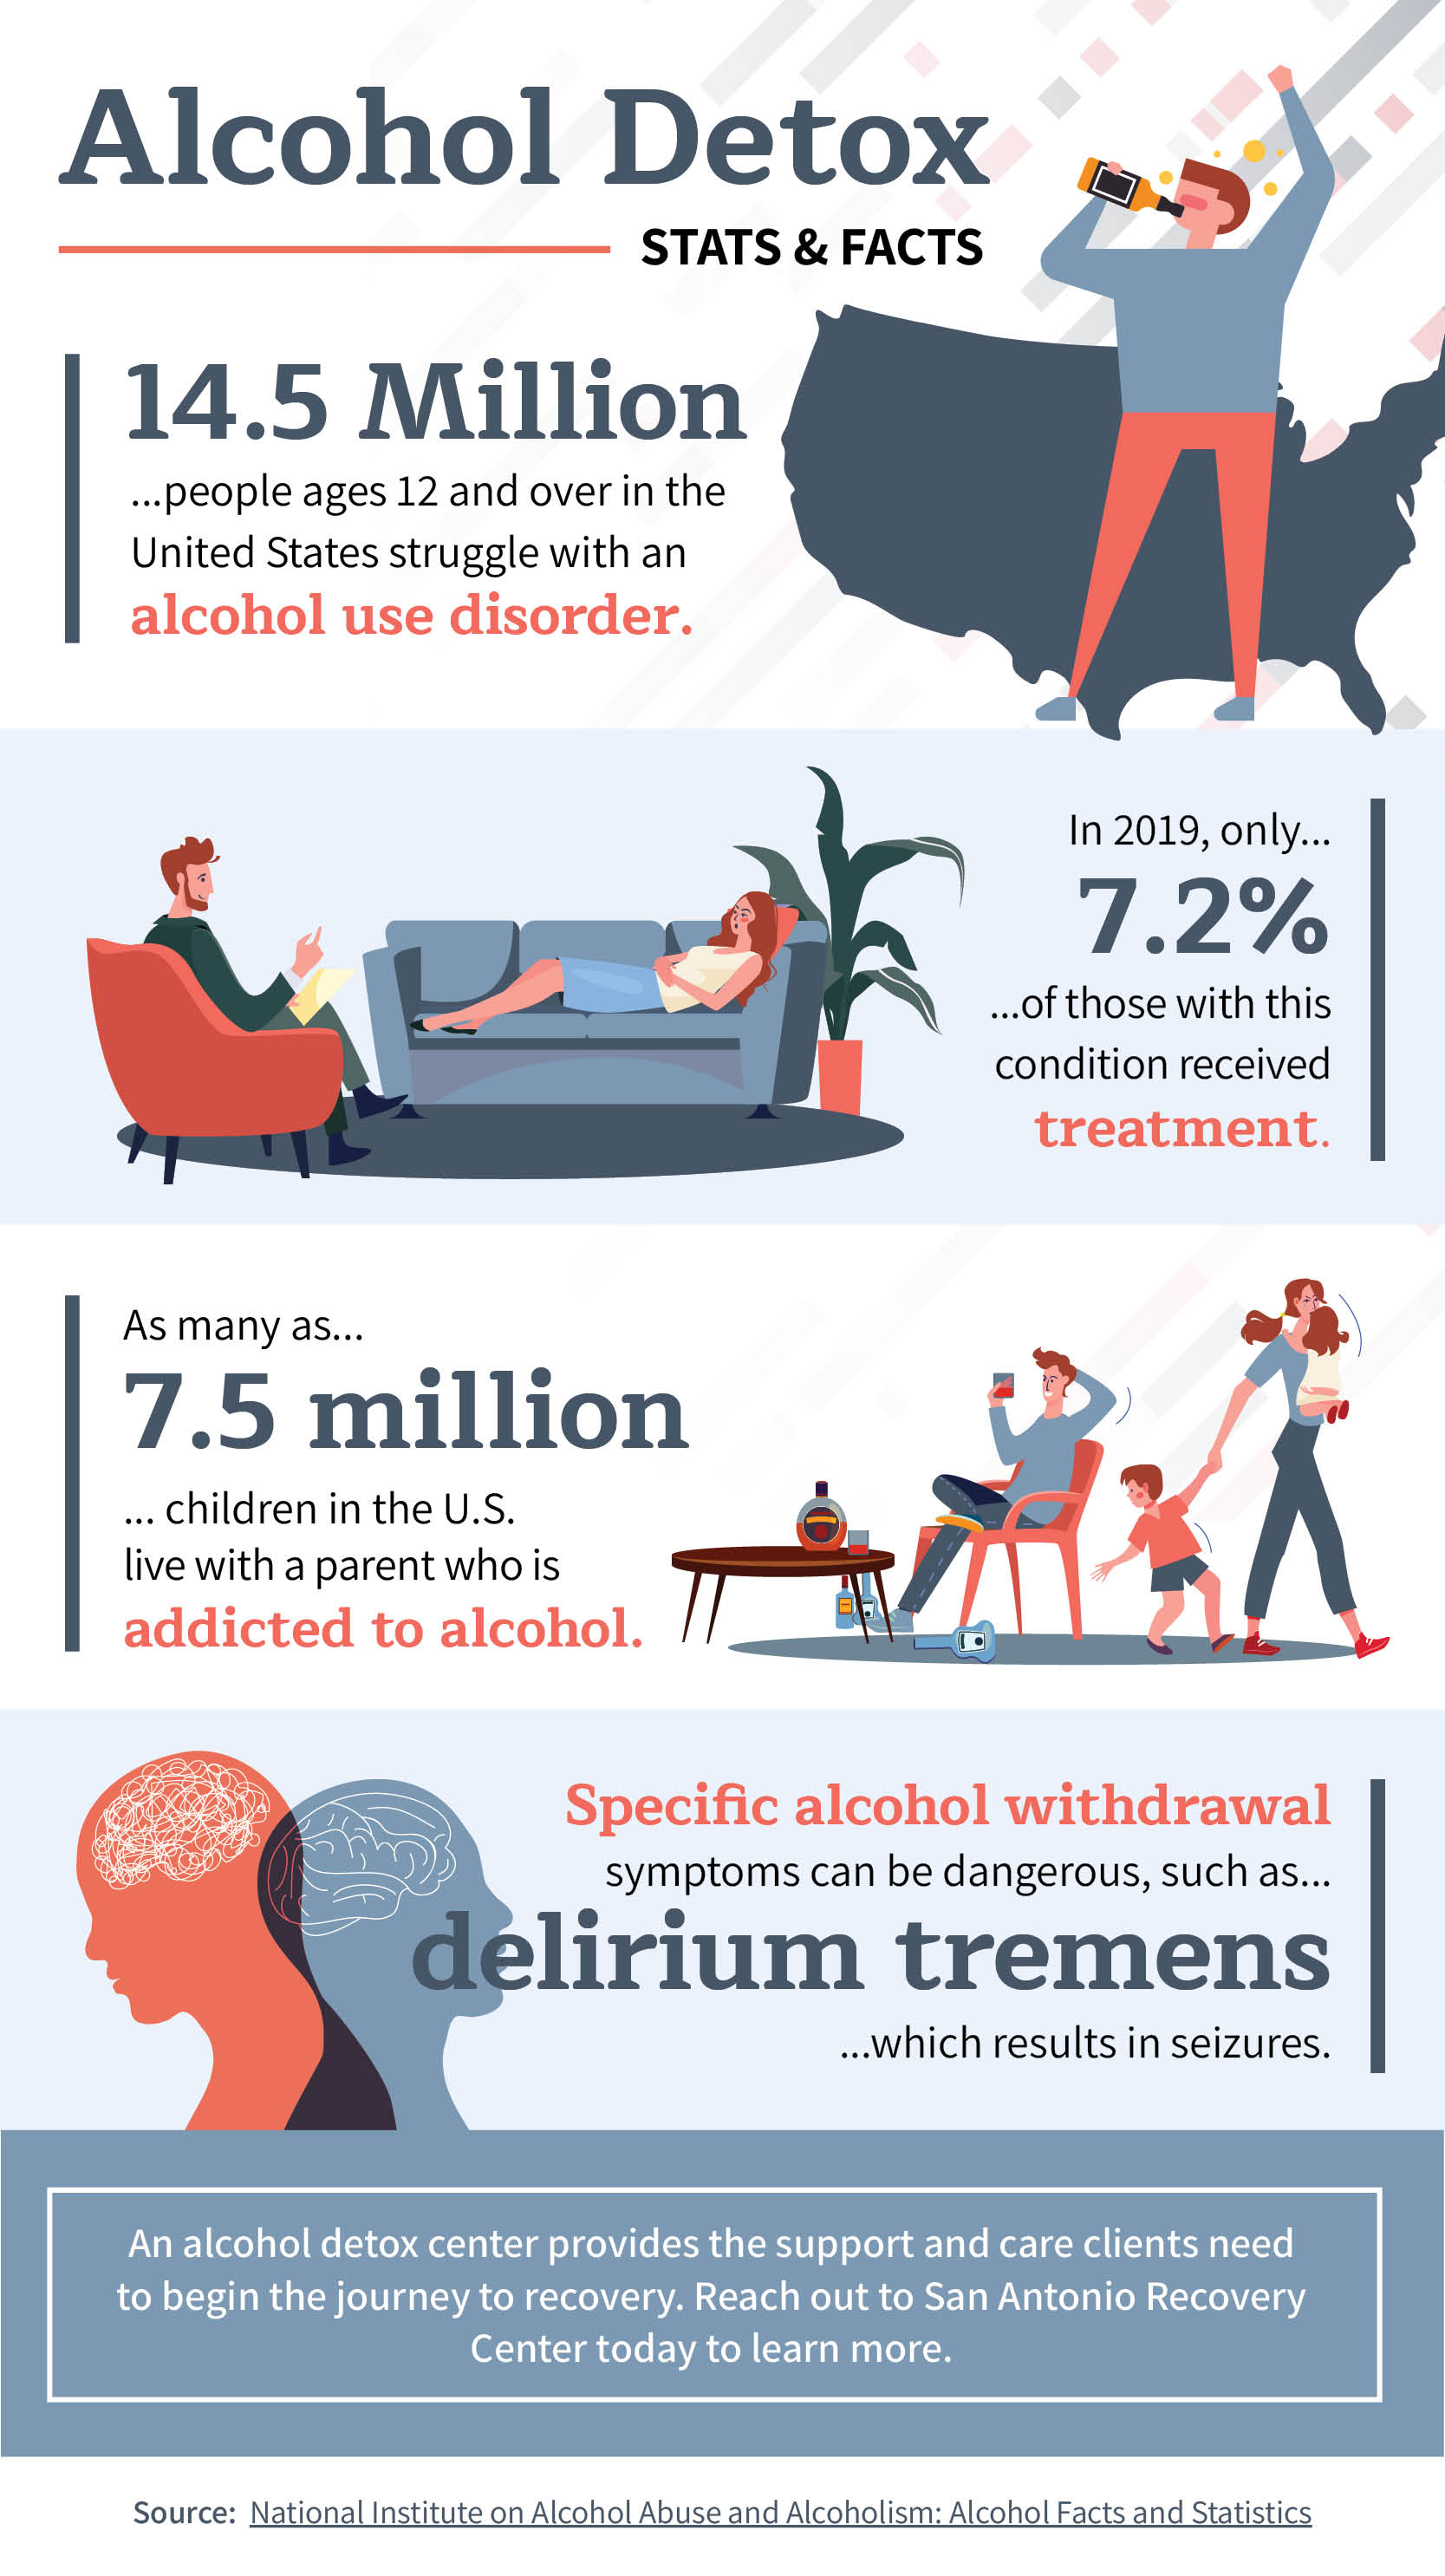 statistics about alcohol detox programs